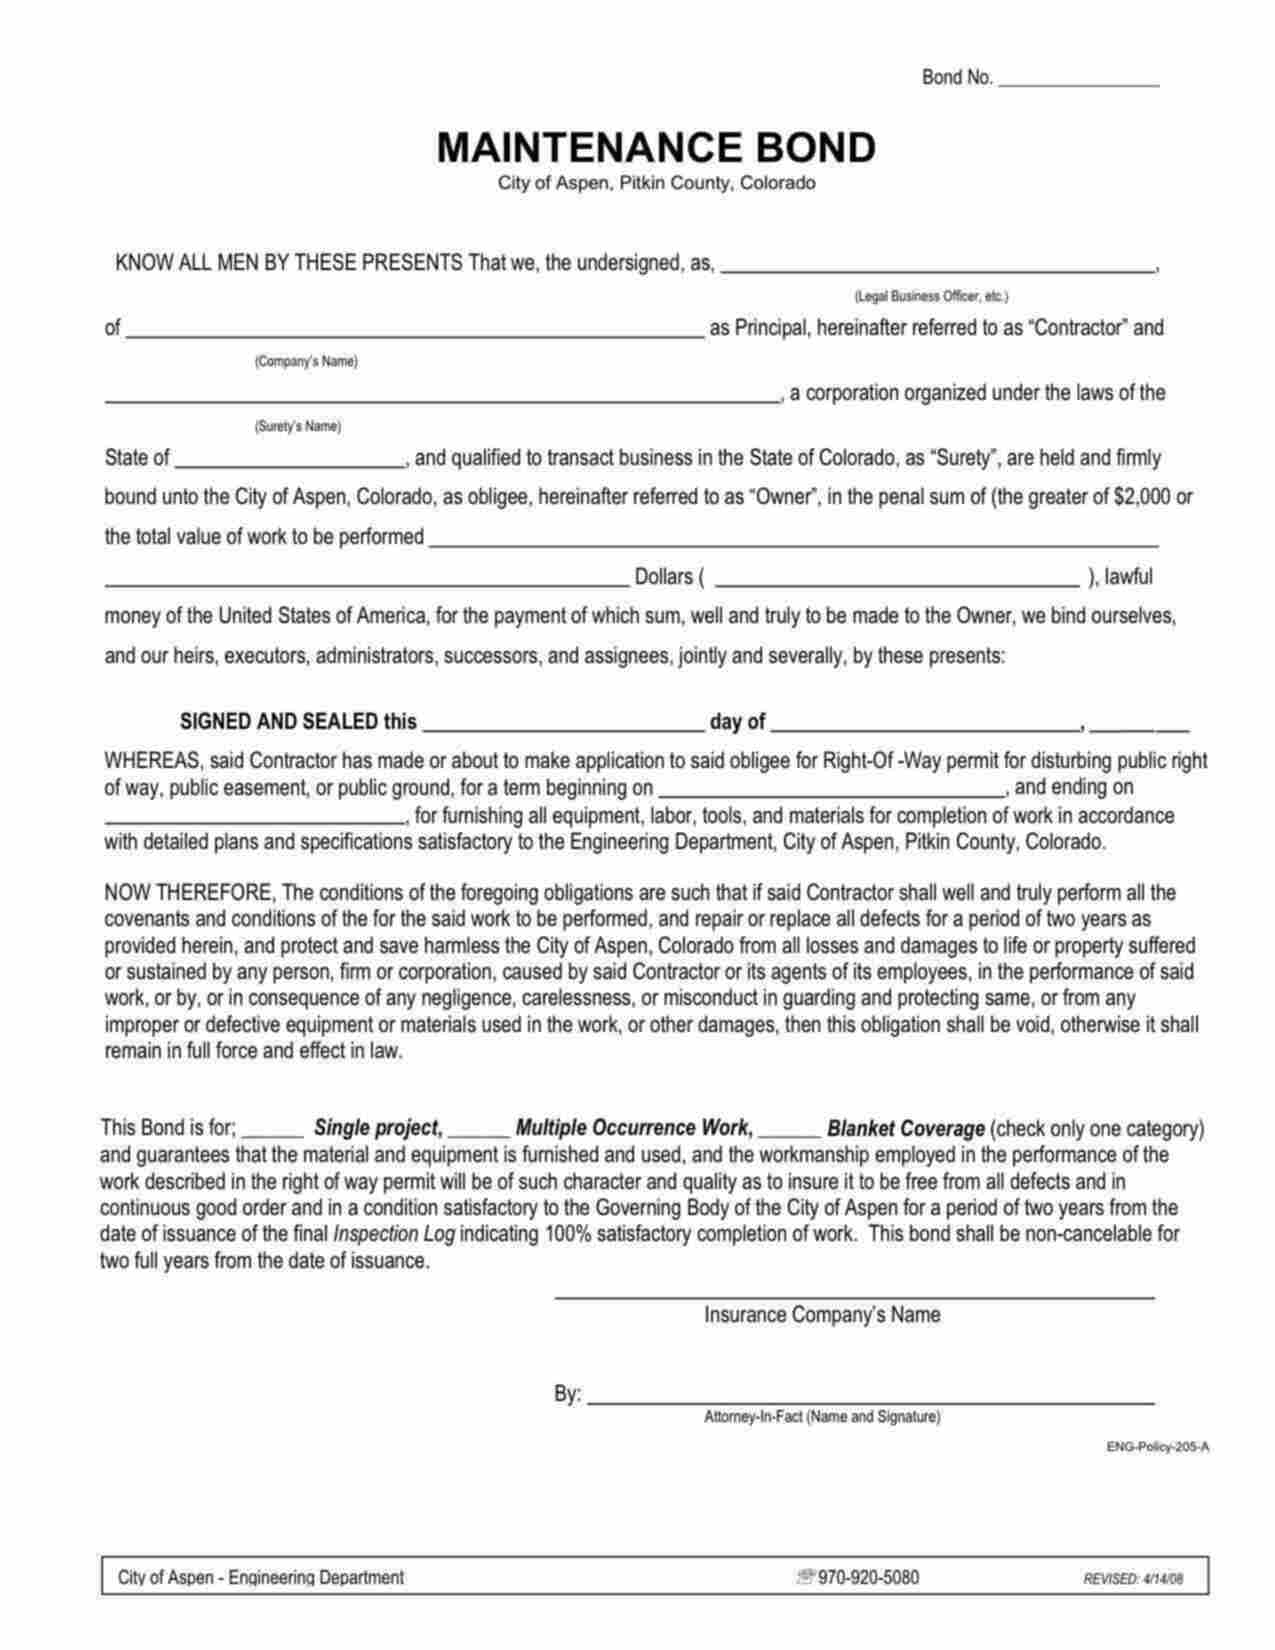 Colorado Maintenance - Multiple Occurrence Work Bond Form